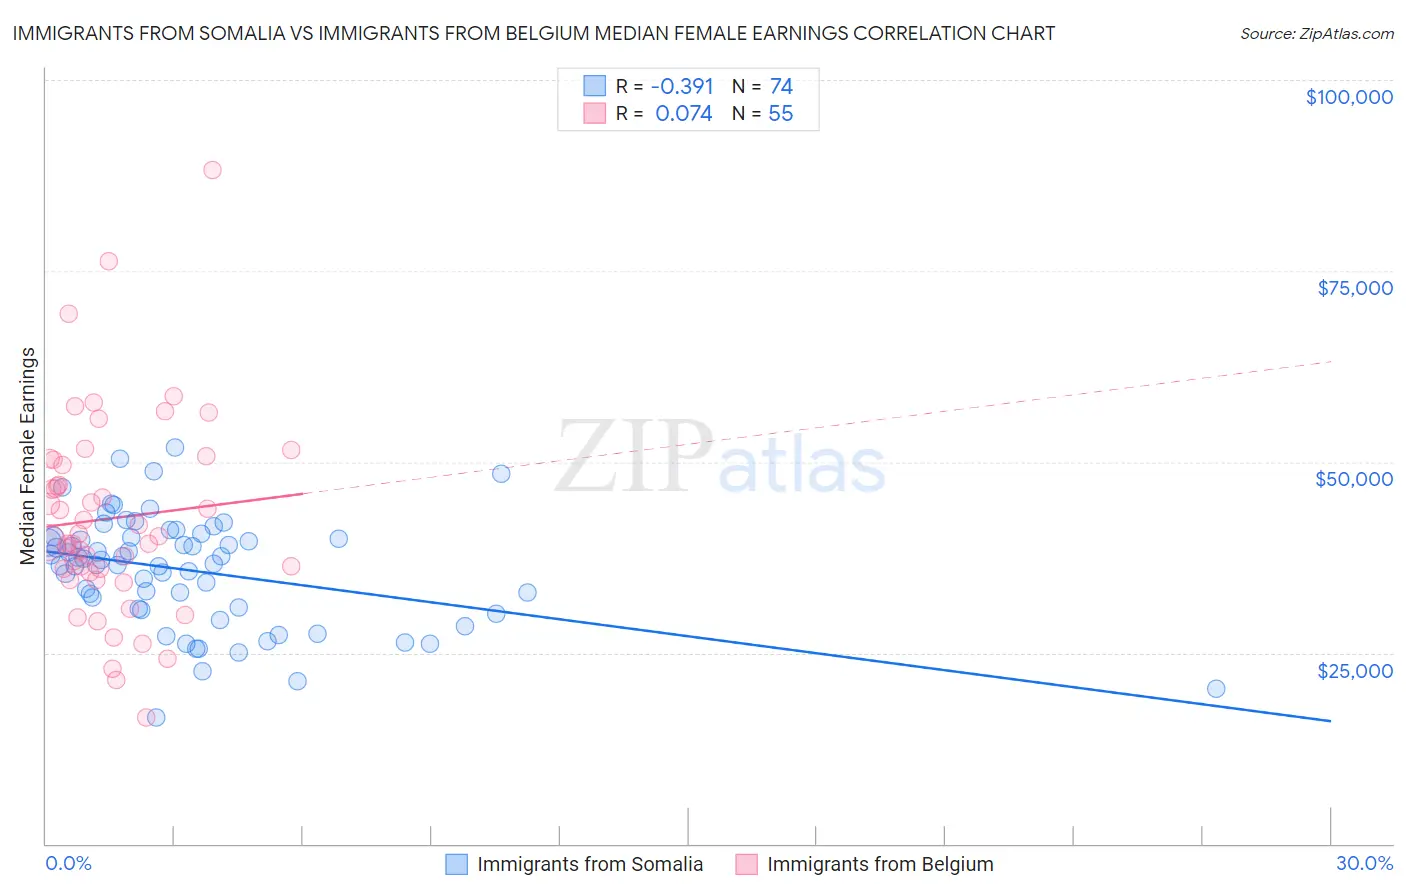 Immigrants from Somalia vs Immigrants from Belgium Median Female Earnings